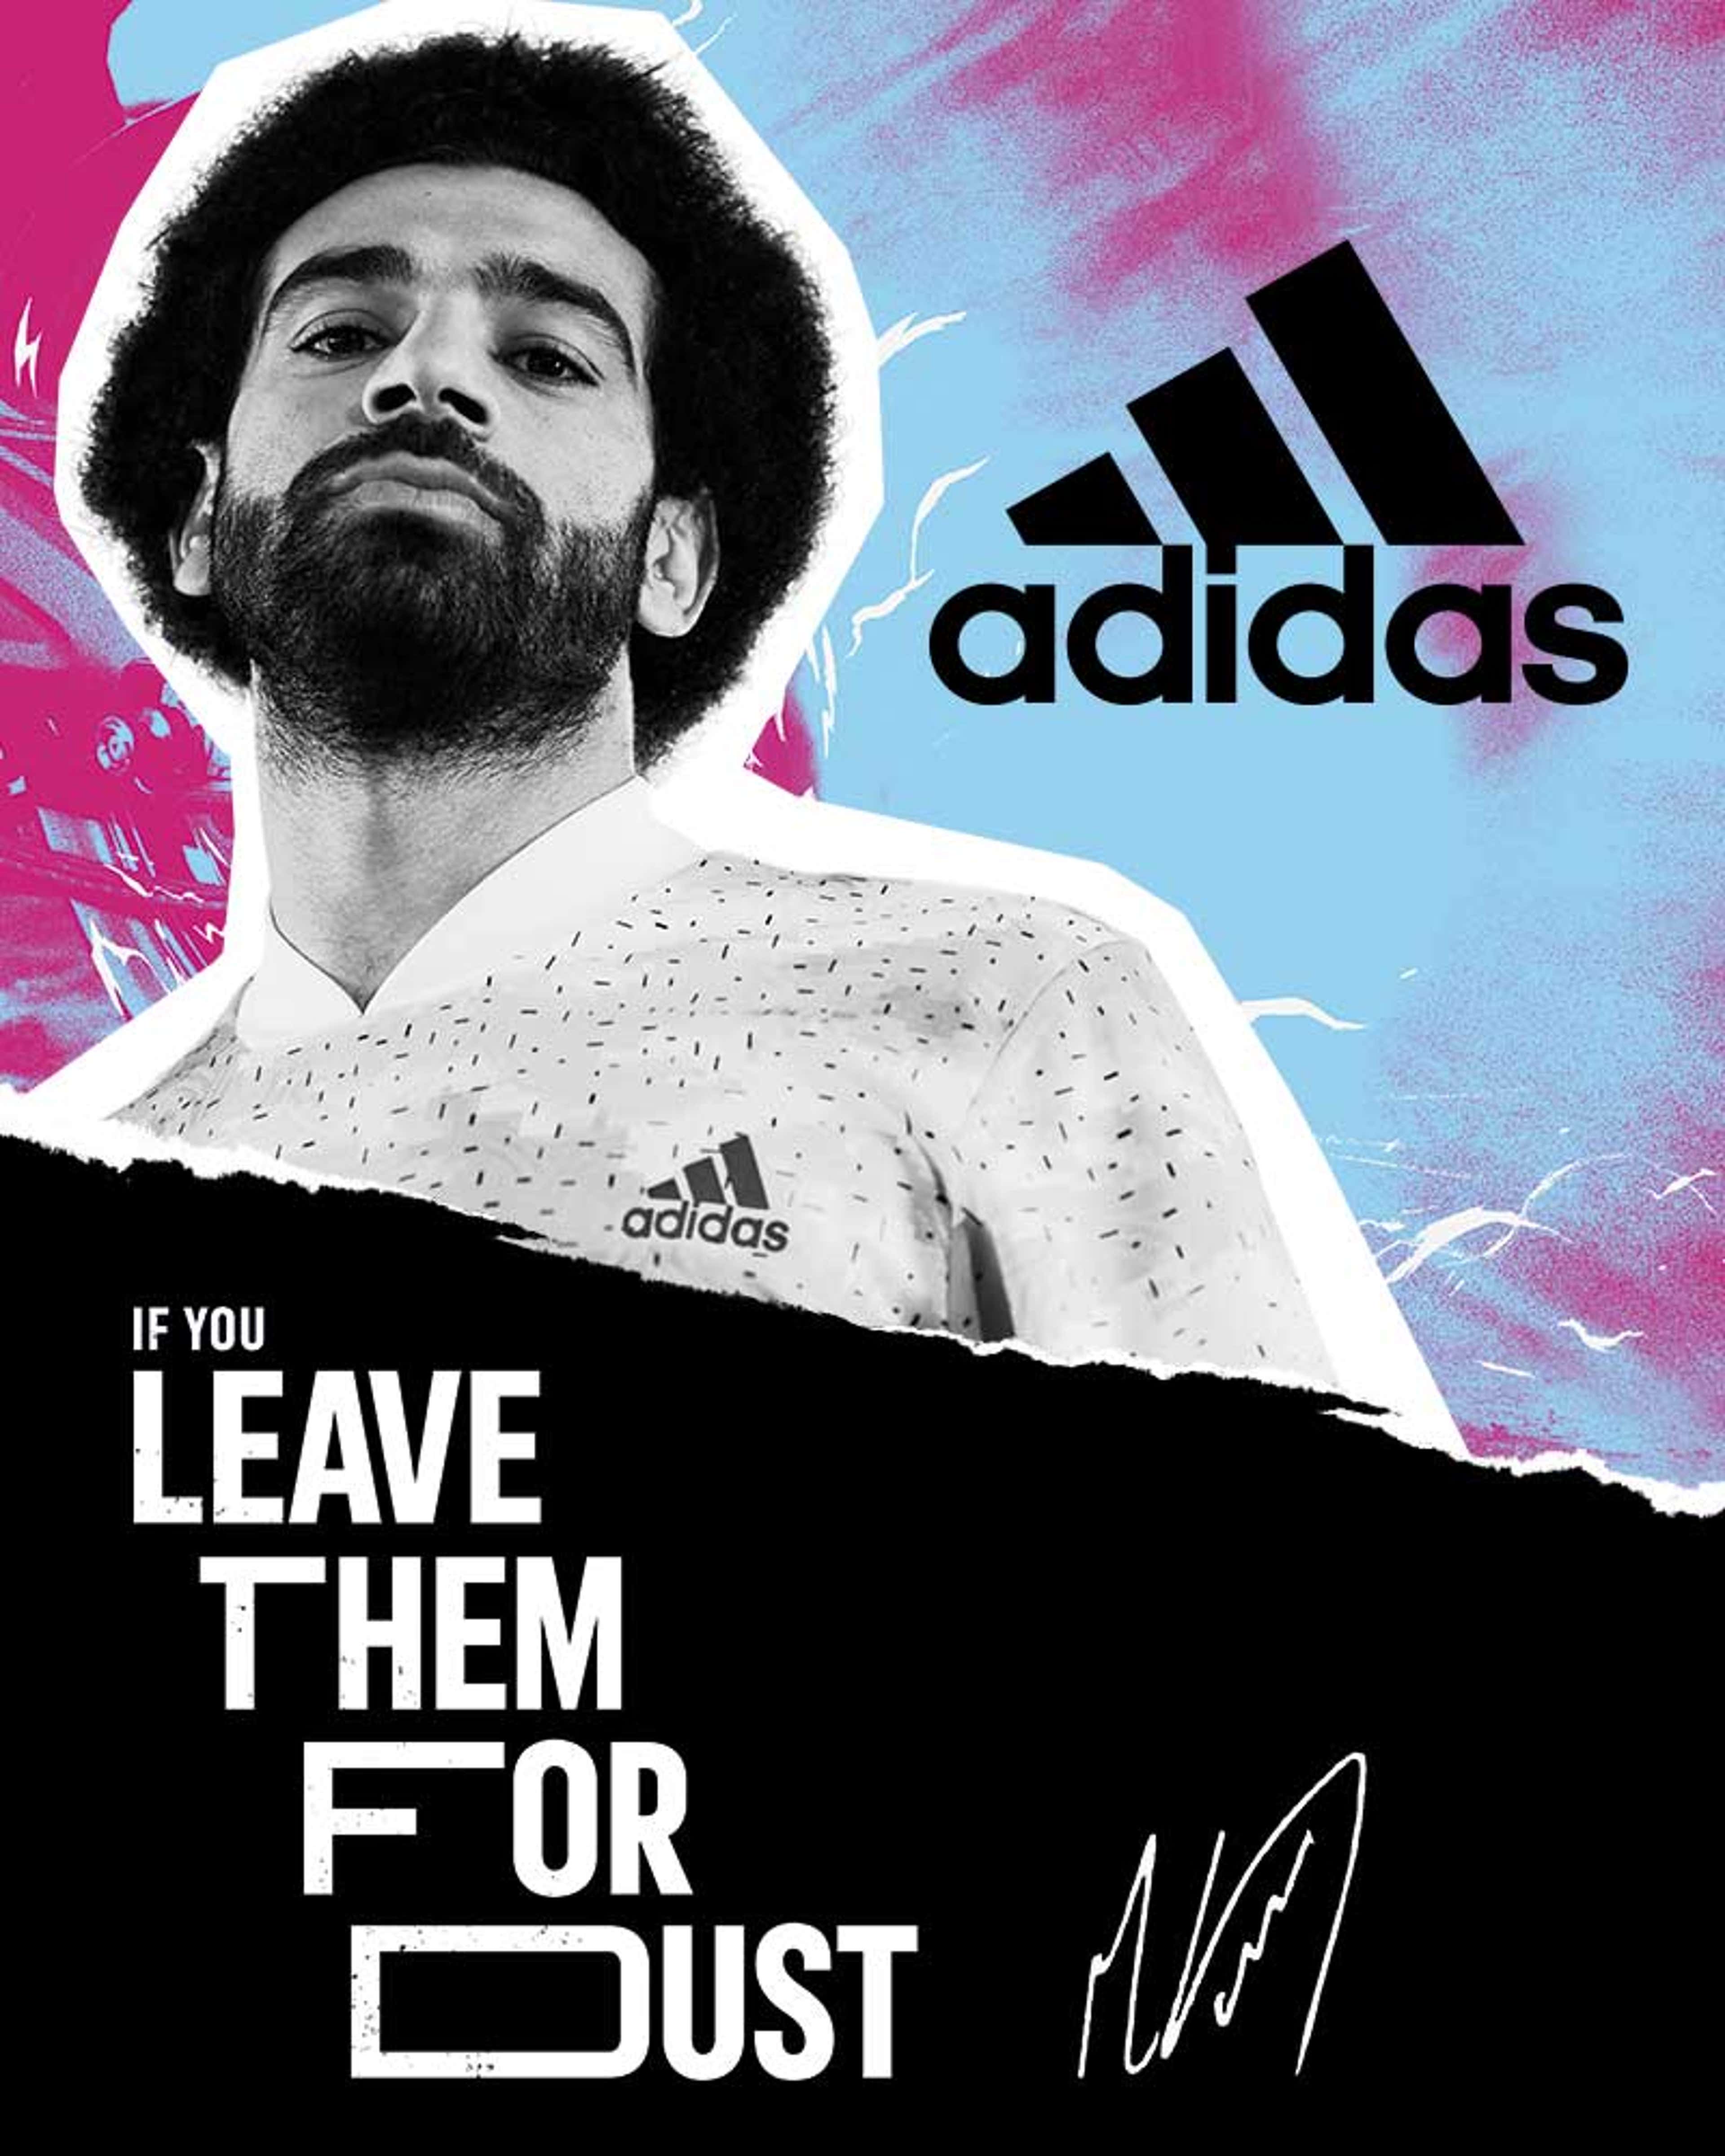 Neerwaarts Shilling Eenheid DareToCreate with adidas' all new Hard Wired Football Pack | Goal.com India